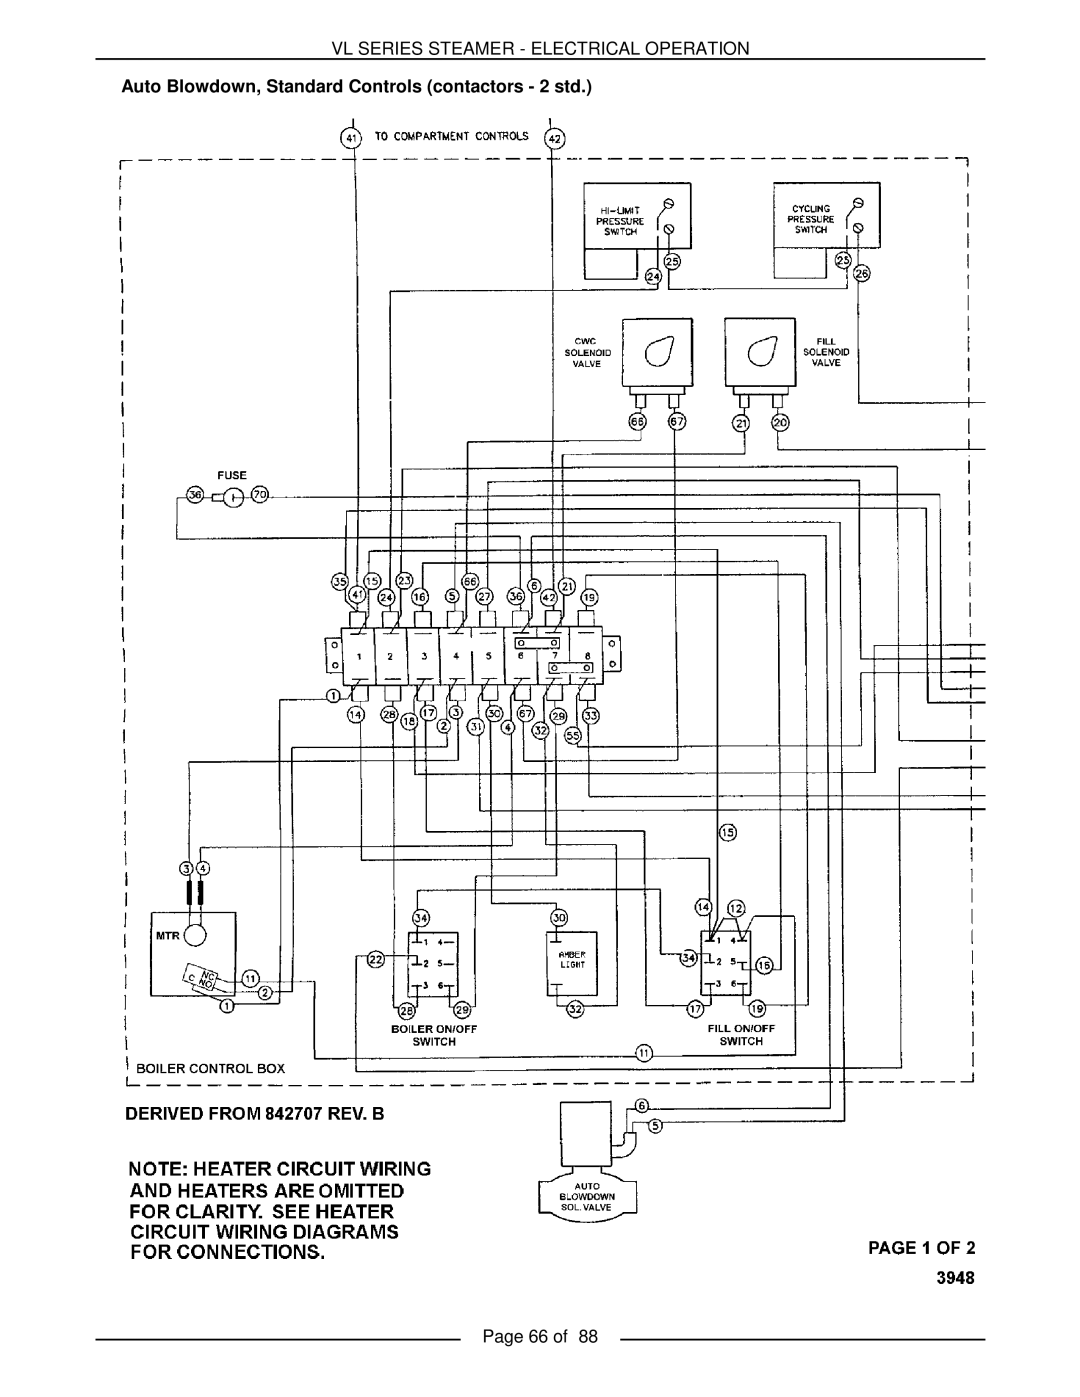 Vulcan-Hart VL3GAS, VL3GMS, VL2GMS, VL2GAS, VL2GSS, VL3GSS, VL3GPS, VL2GPS Vl Series Steamer - Electrical Operation, Page 66 of 